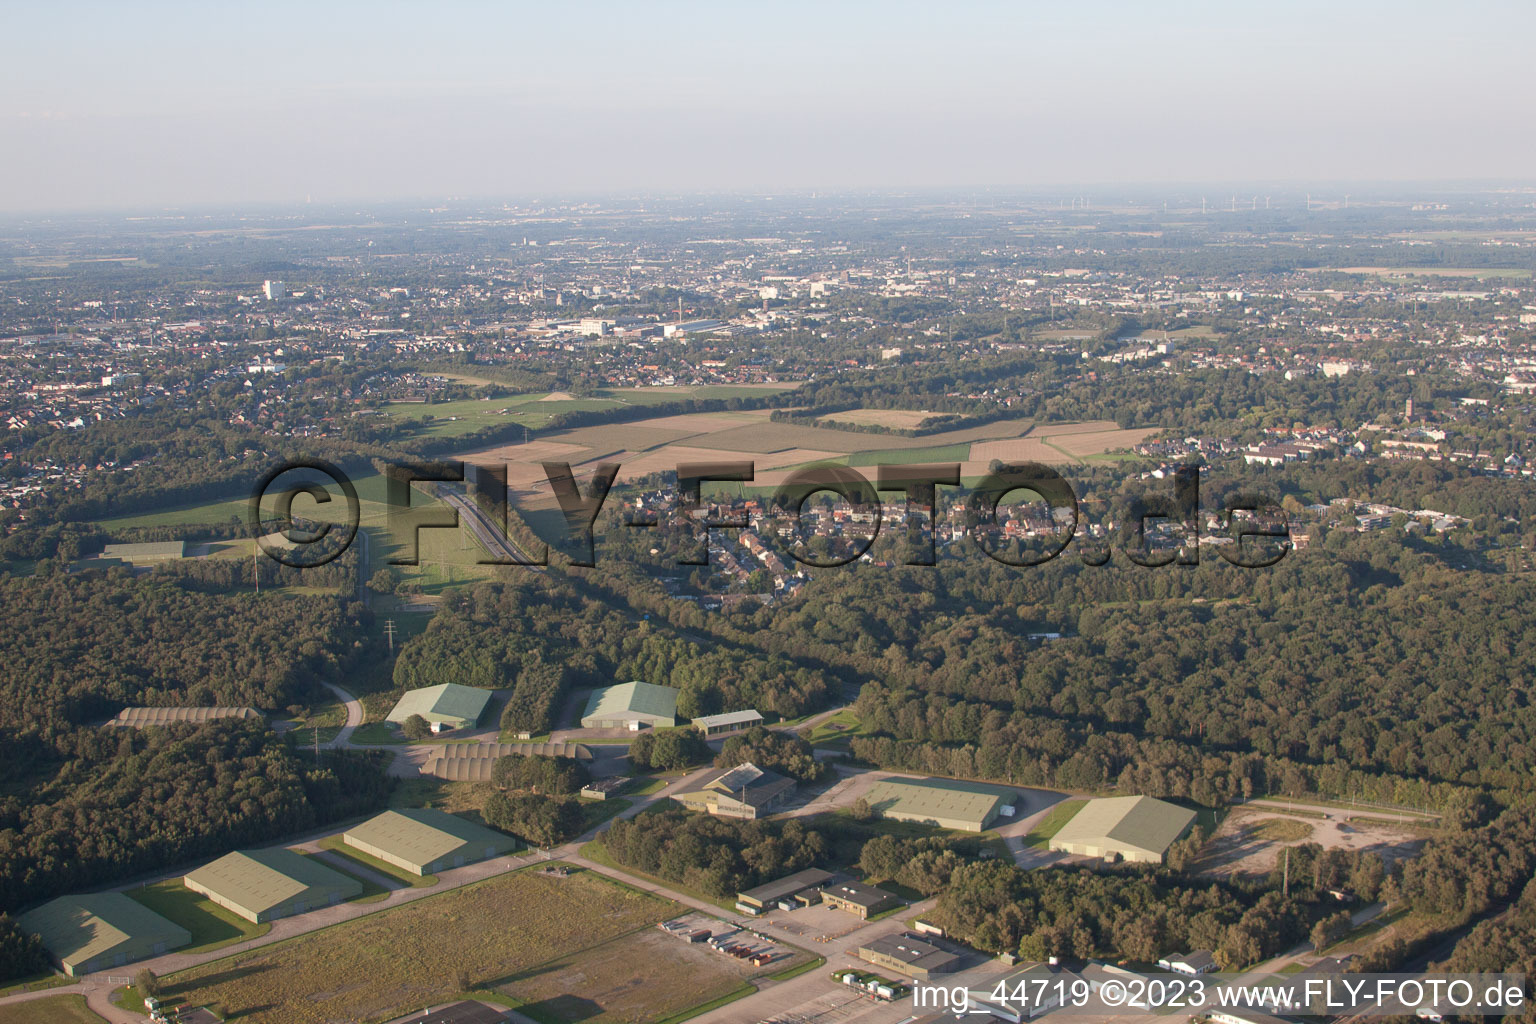 Aerial view of Mönchengladbach in the state North Rhine-Westphalia, Germany